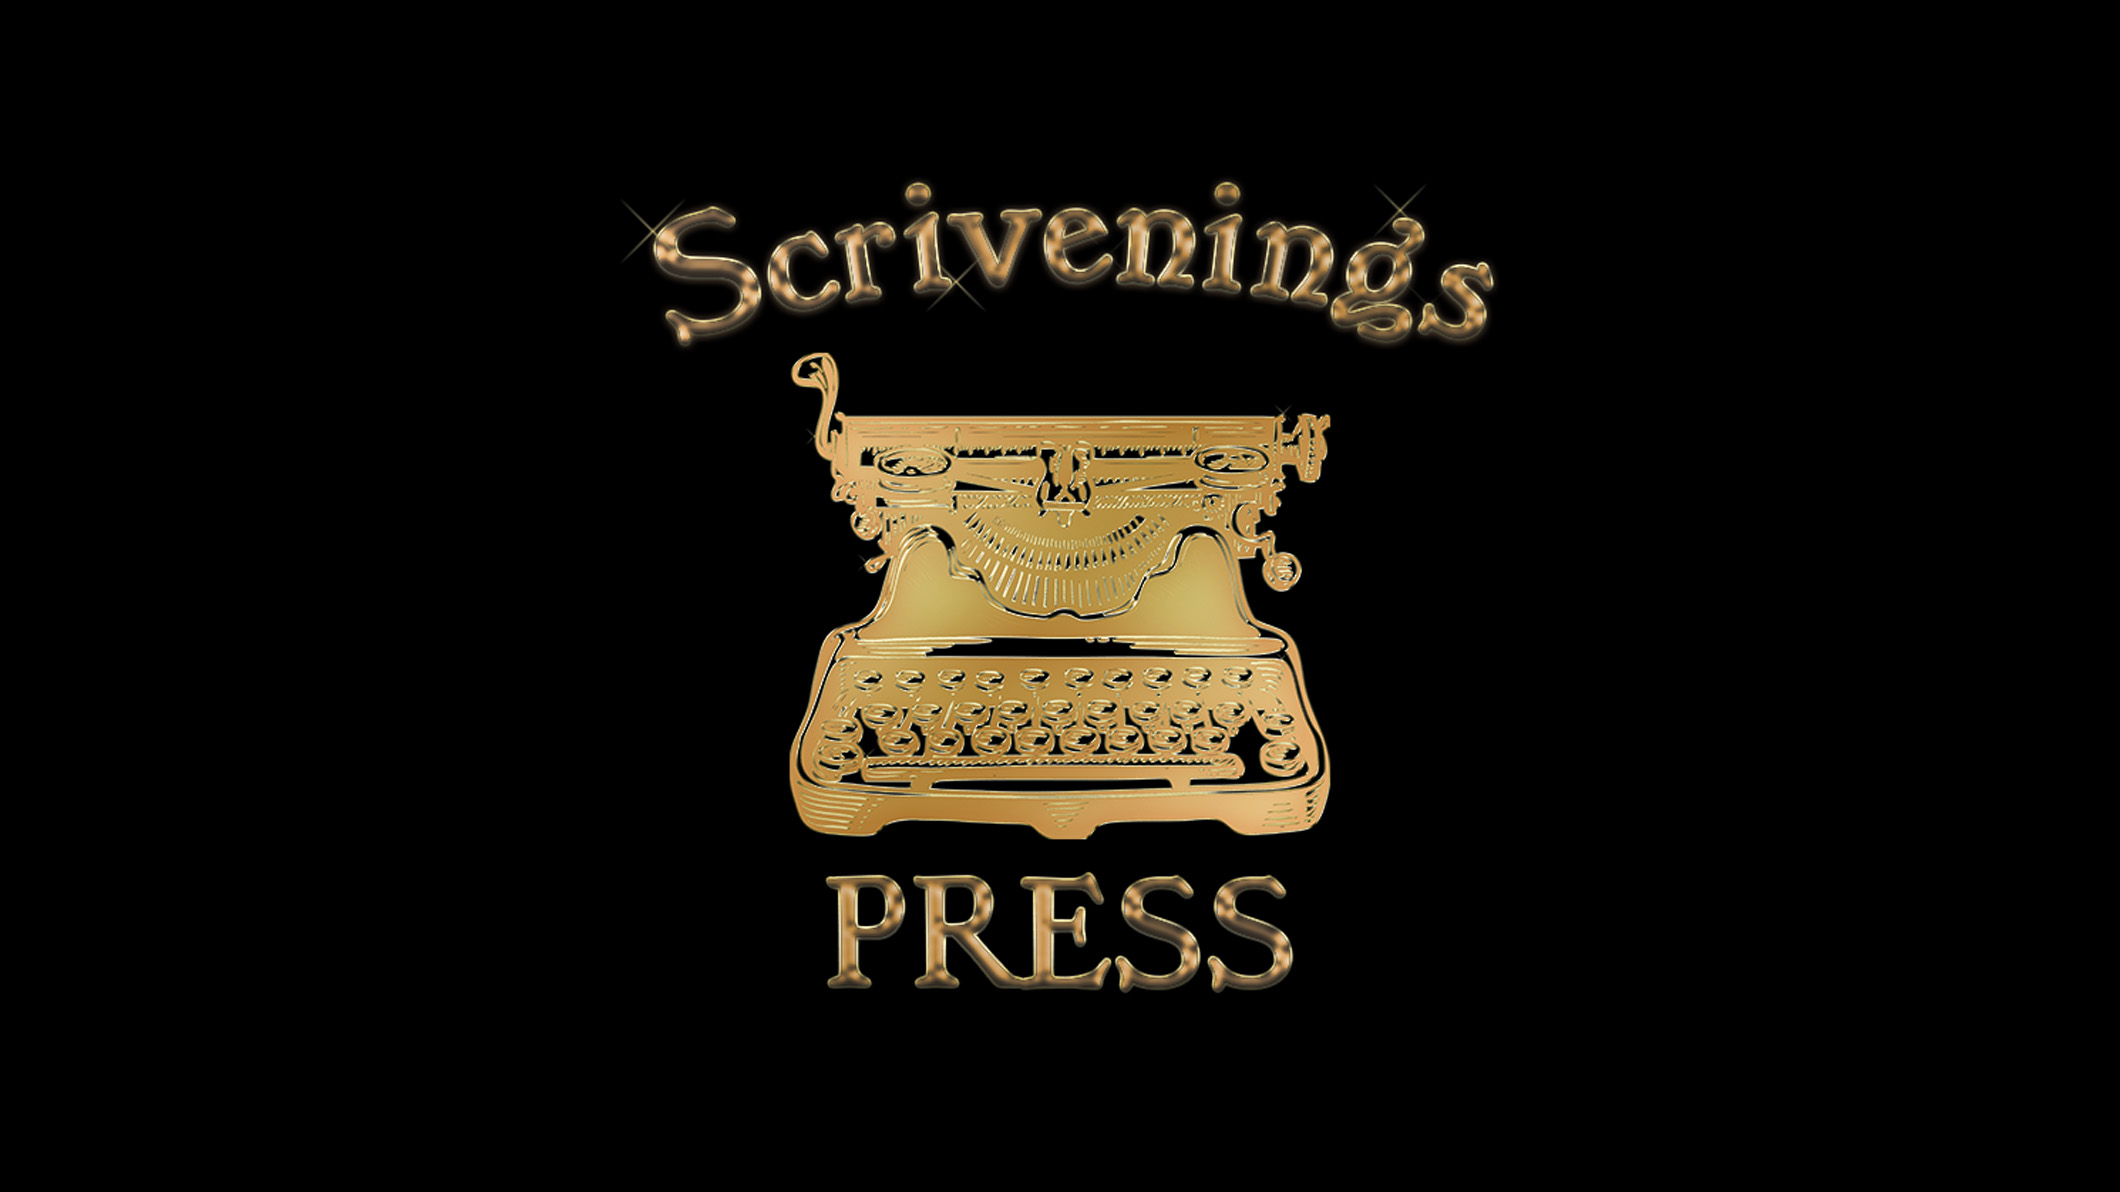 Scrivenings Press LLC